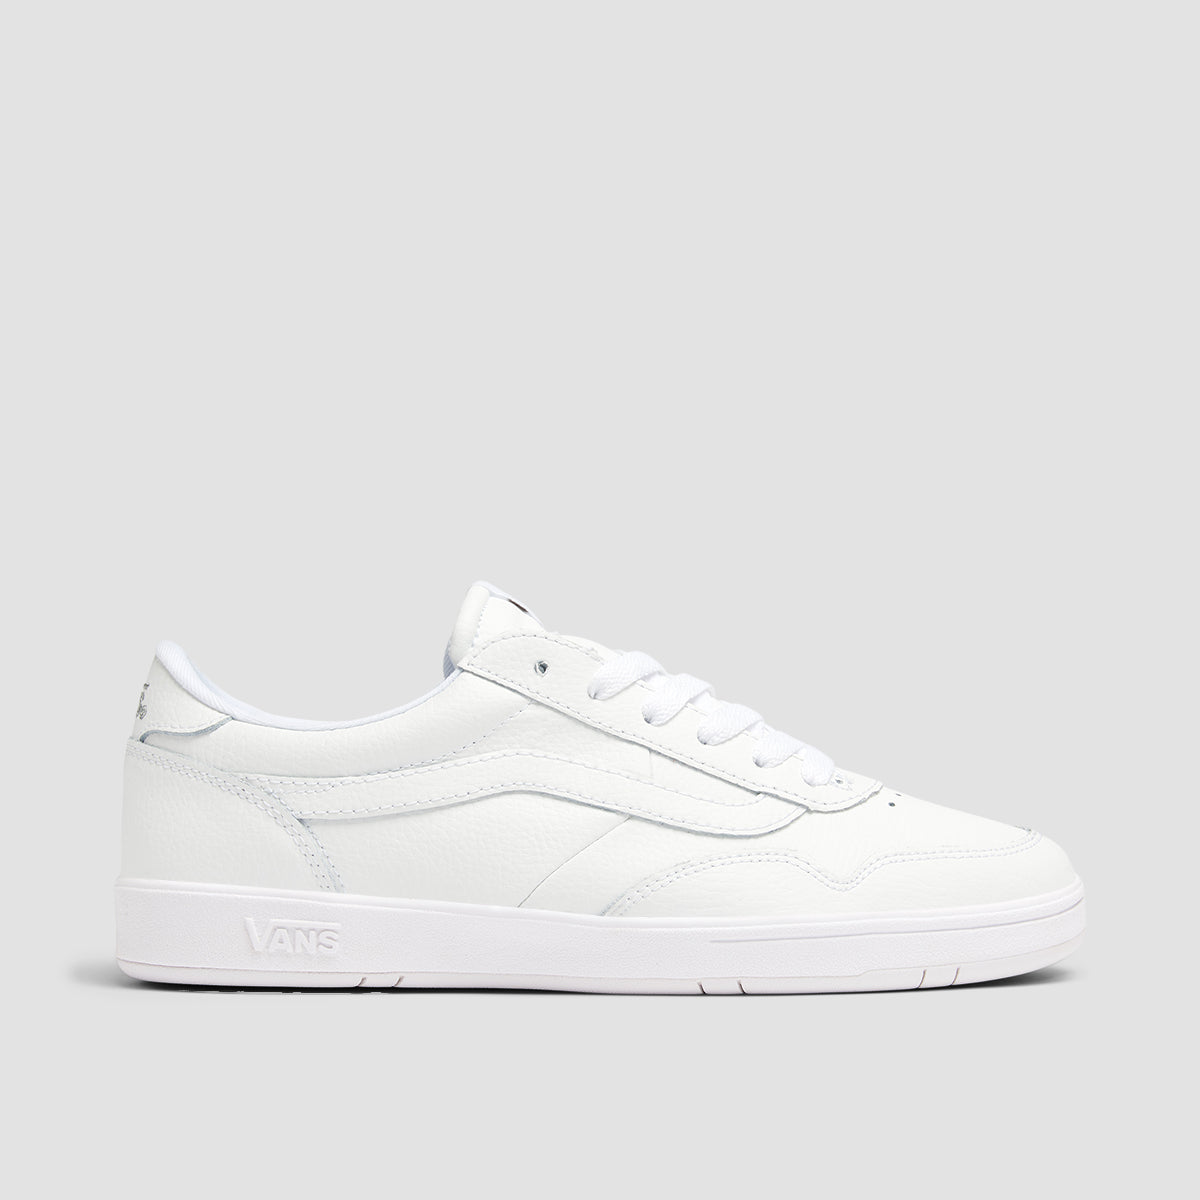 Vans Cruze Too CC Shoes - Leather True White/True White